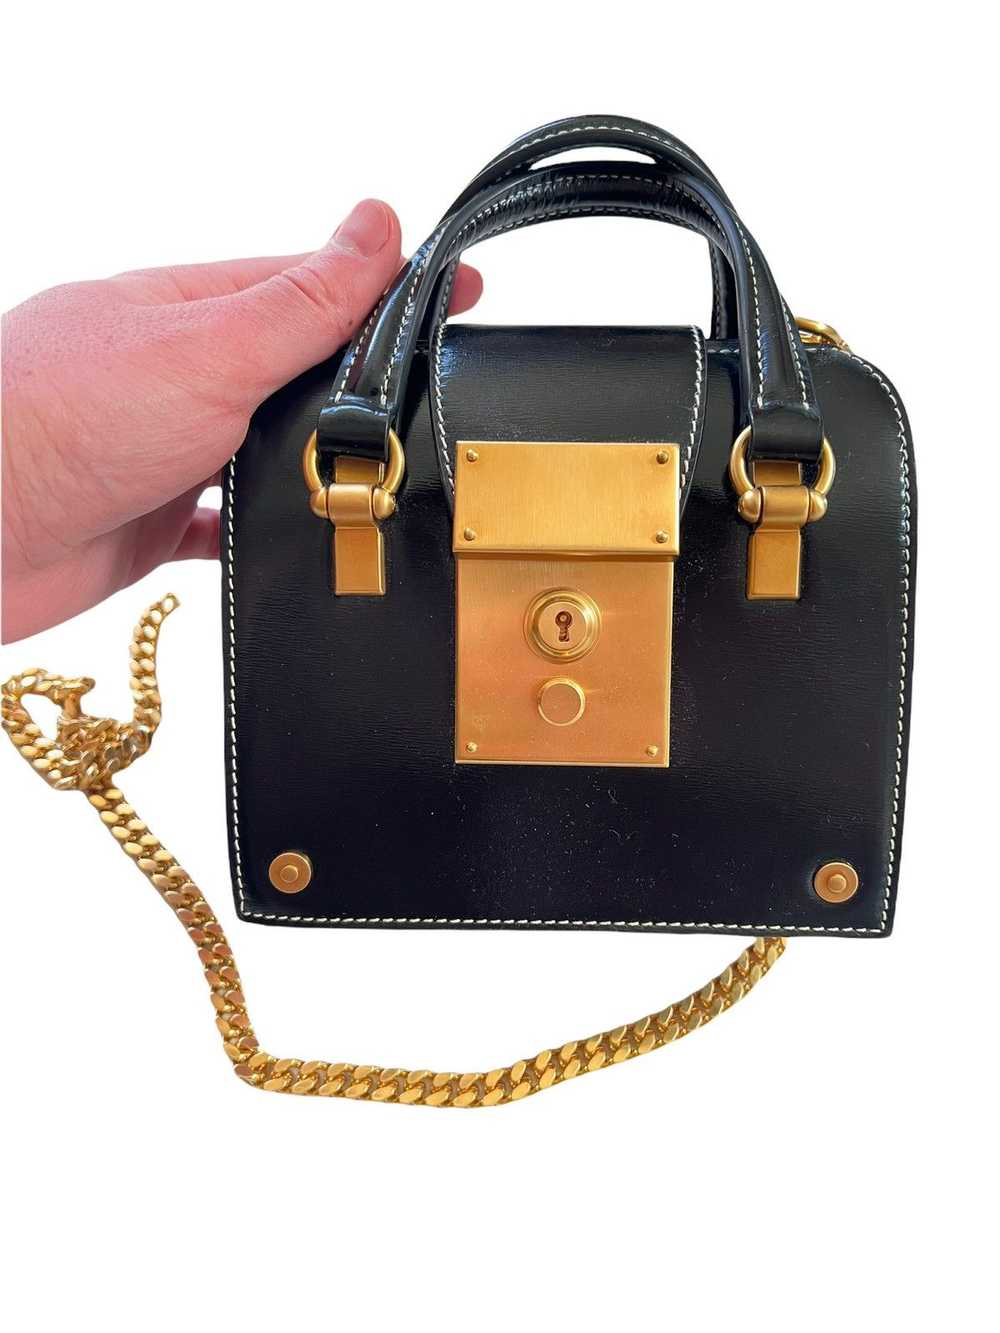 Thom Browne $5,100 Mrs. Thom Chain Crossbody Bag - image 12